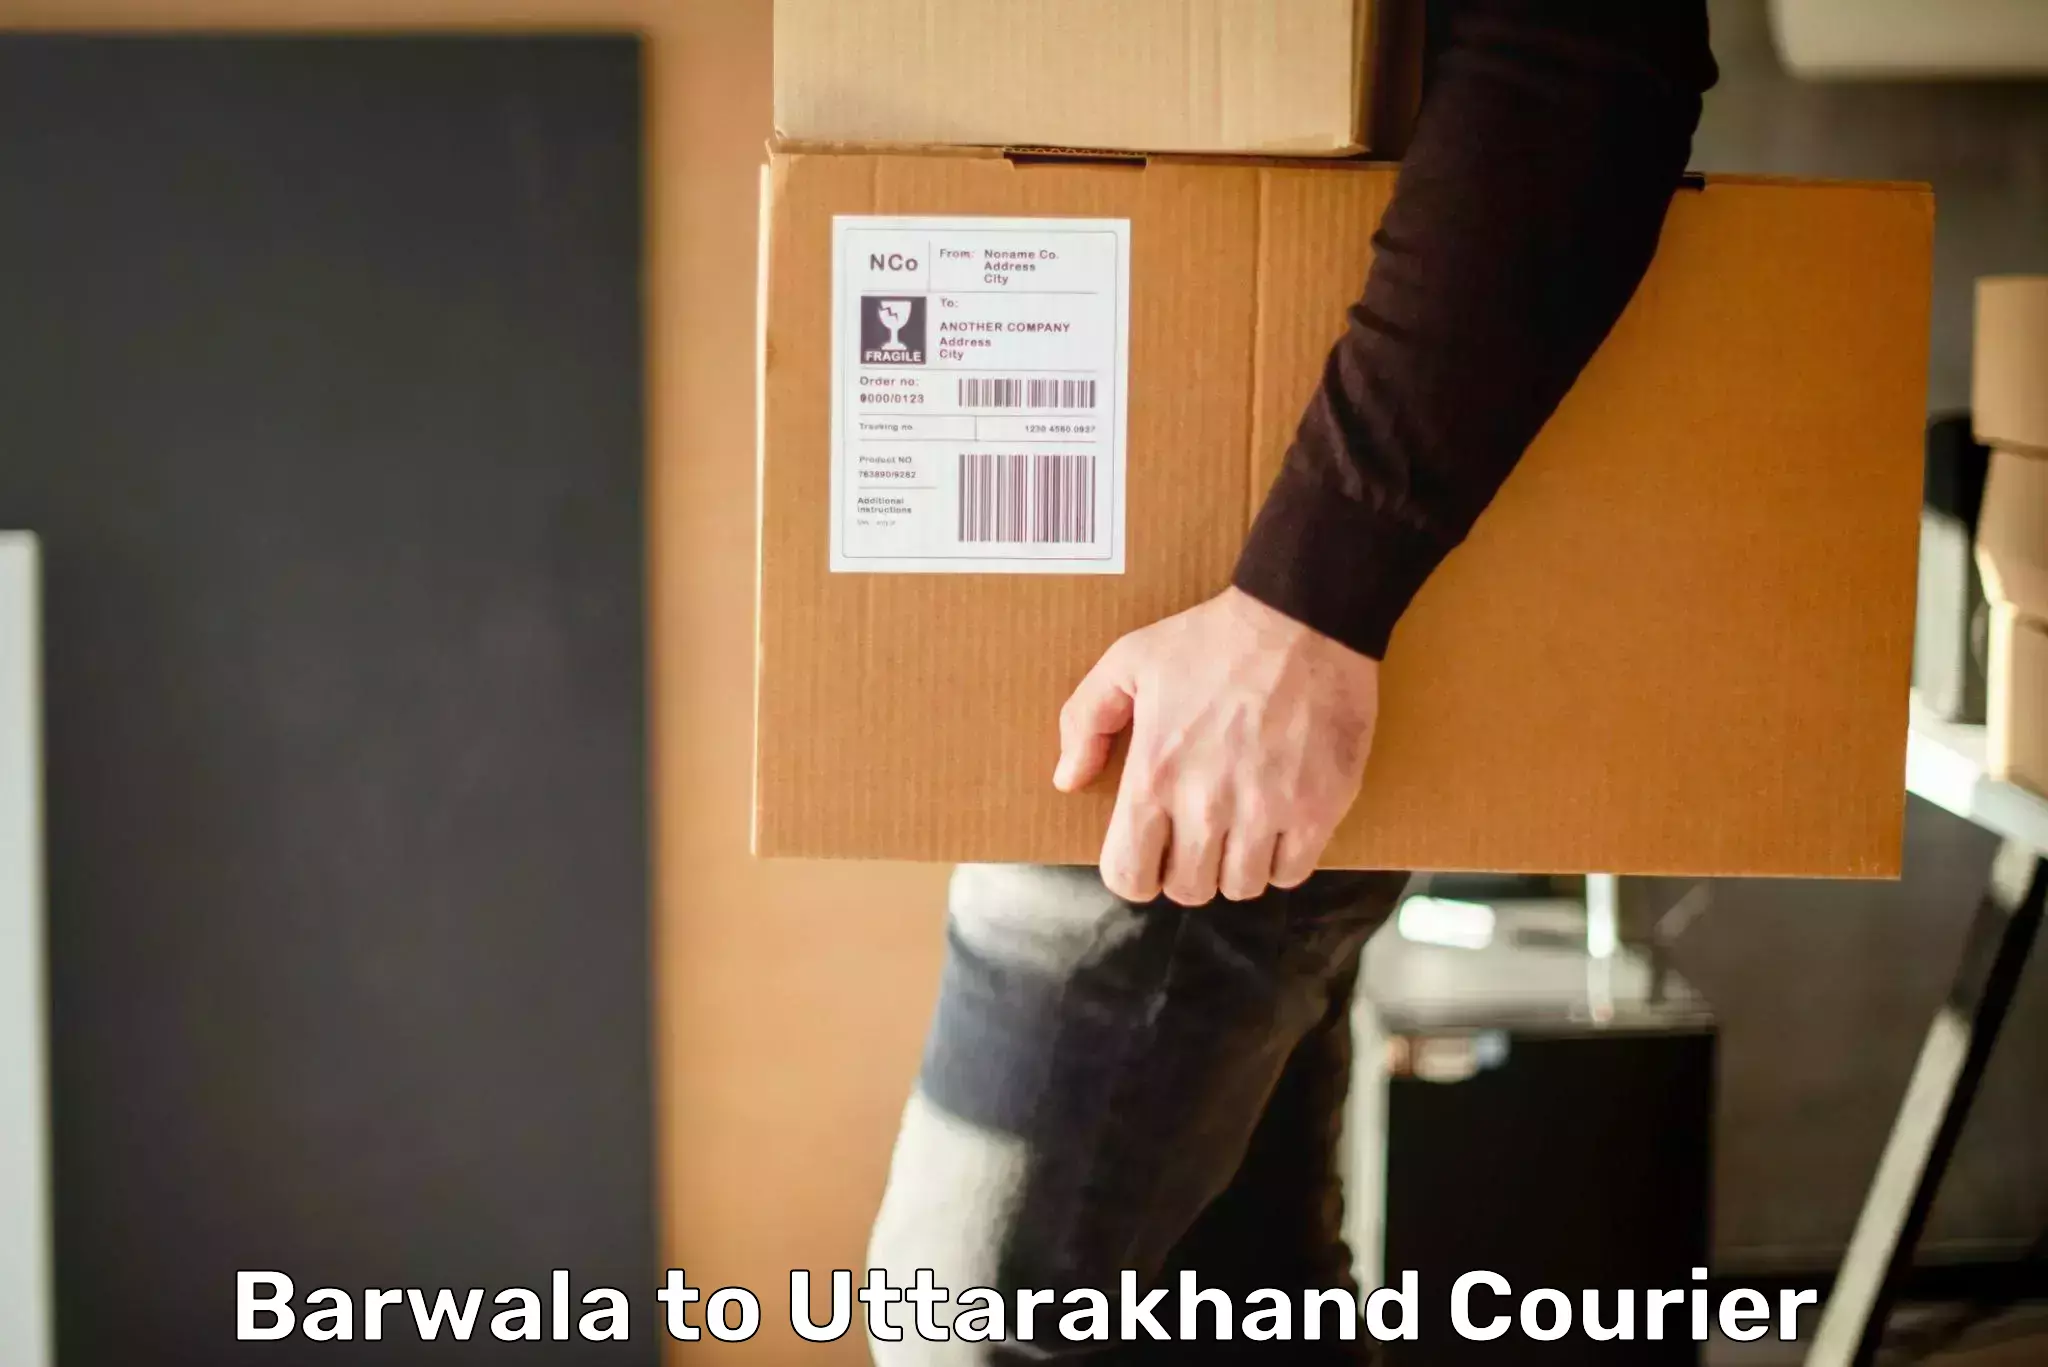 Delivery service partnership Barwala to Rishikesh